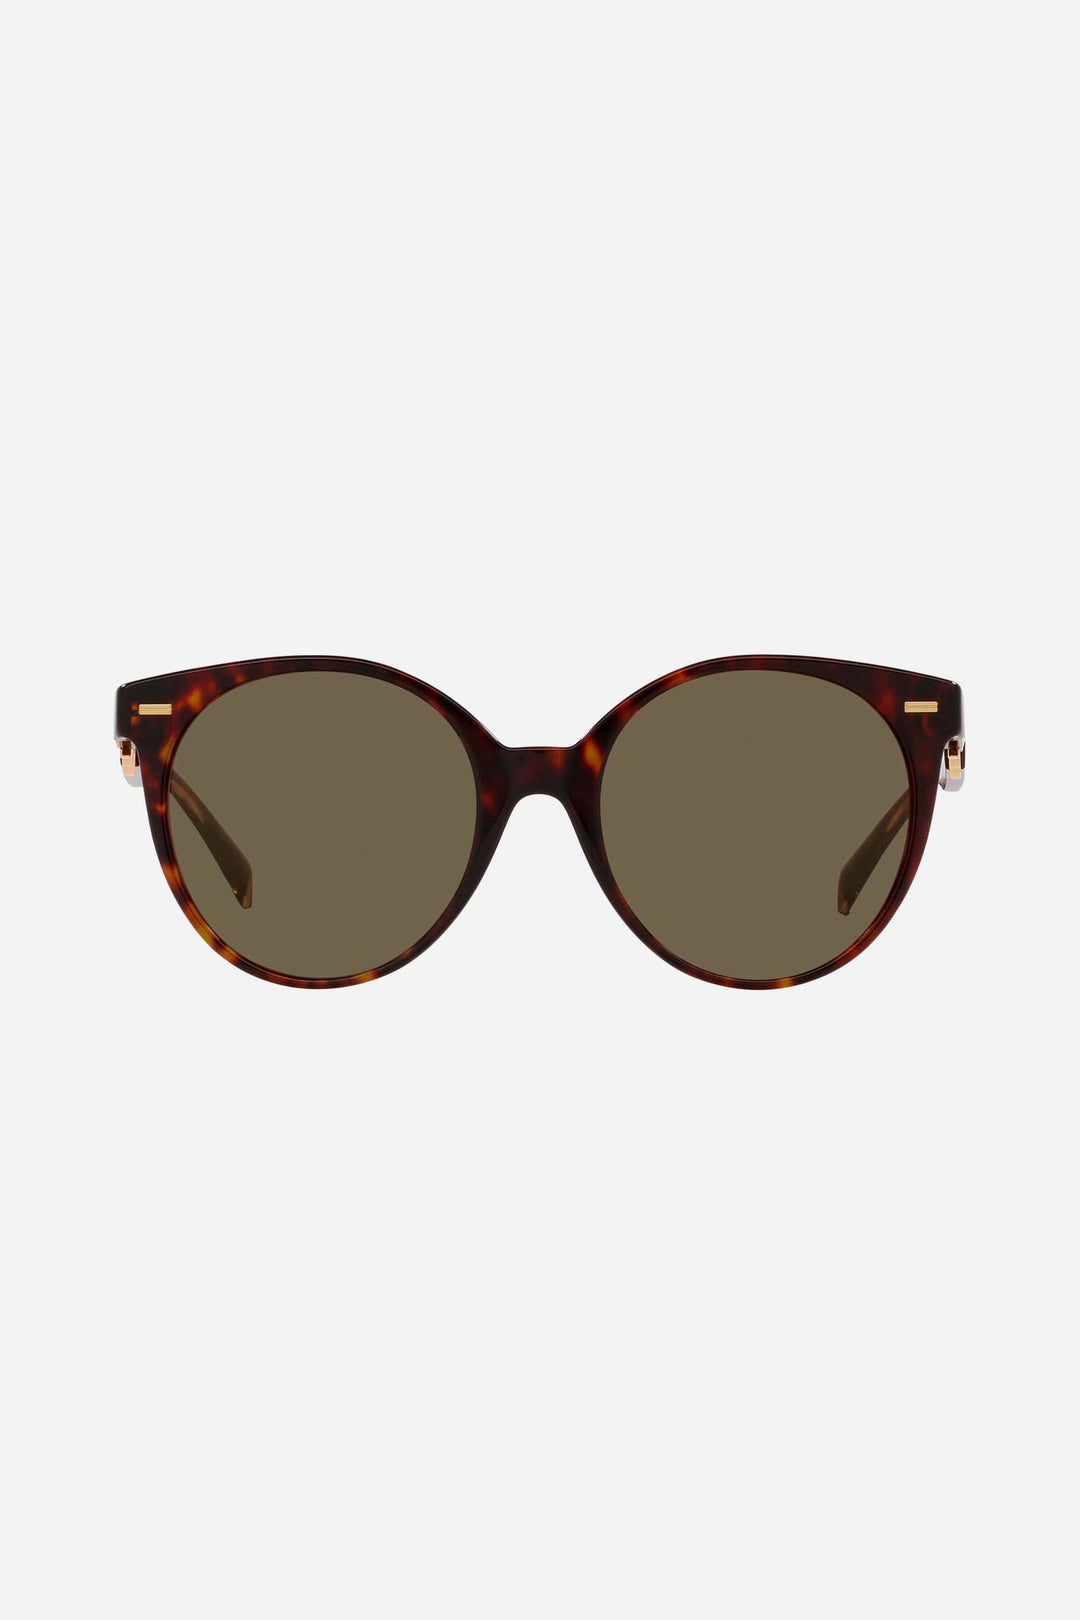 Versace cat eye havana sunglasses with the iconic jellyfish - Eyewear Club